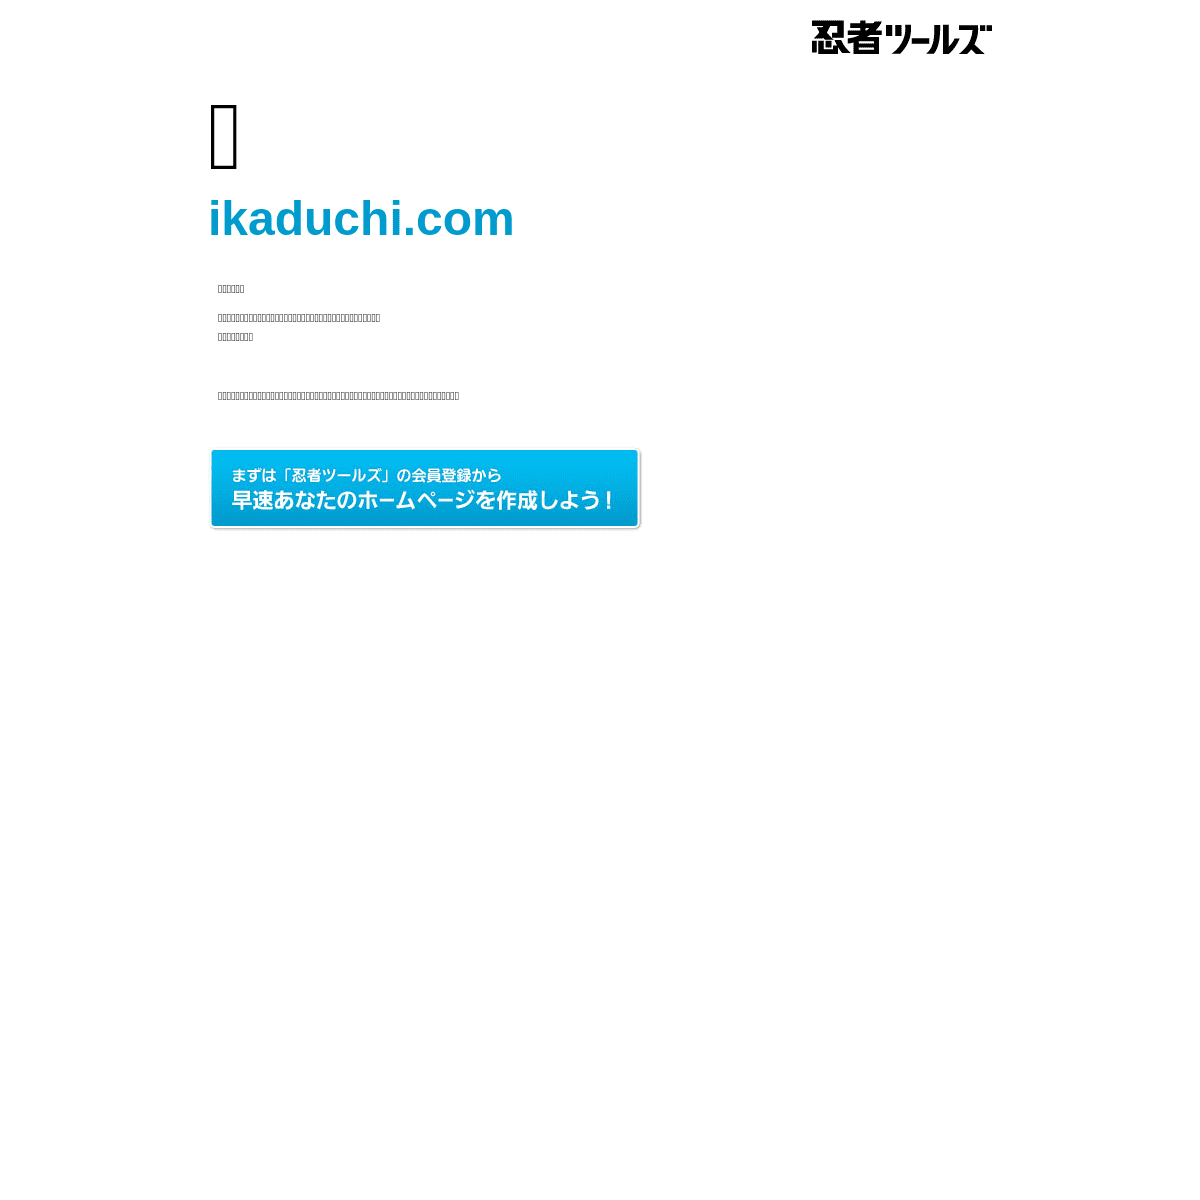 A complete backup of https://ikaduchi.com